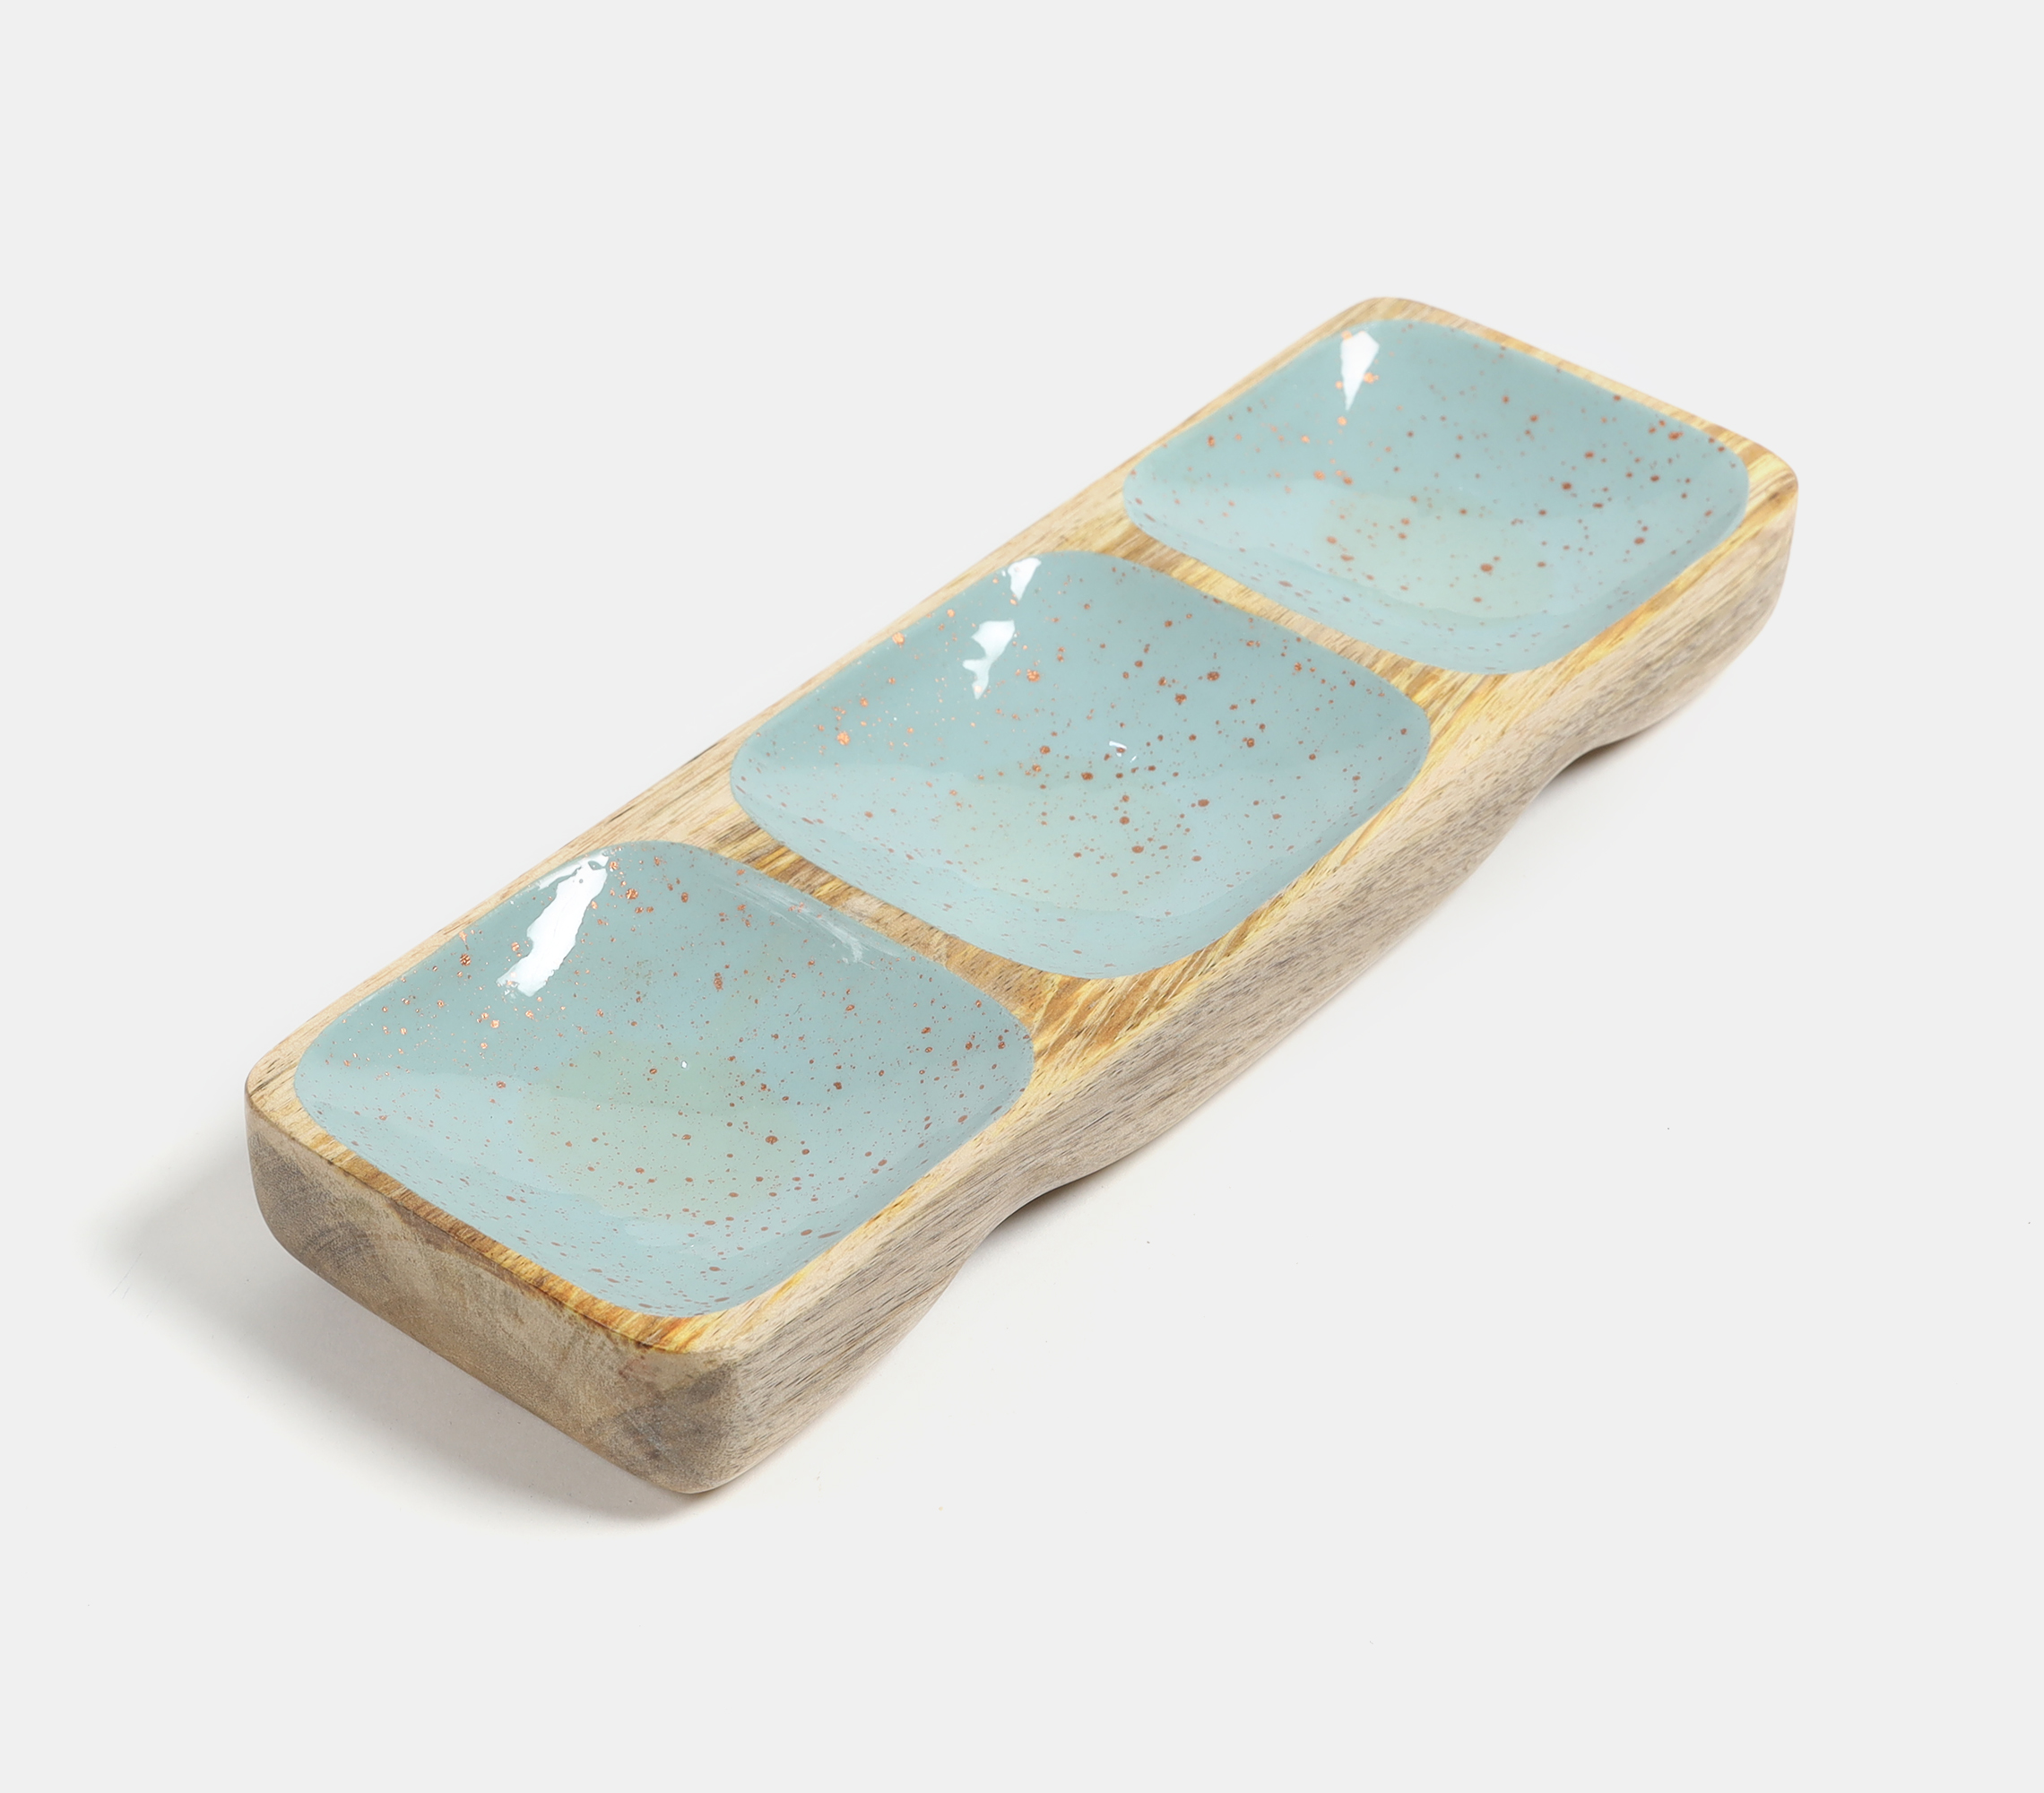 Enamelled wooden mint elongated tray